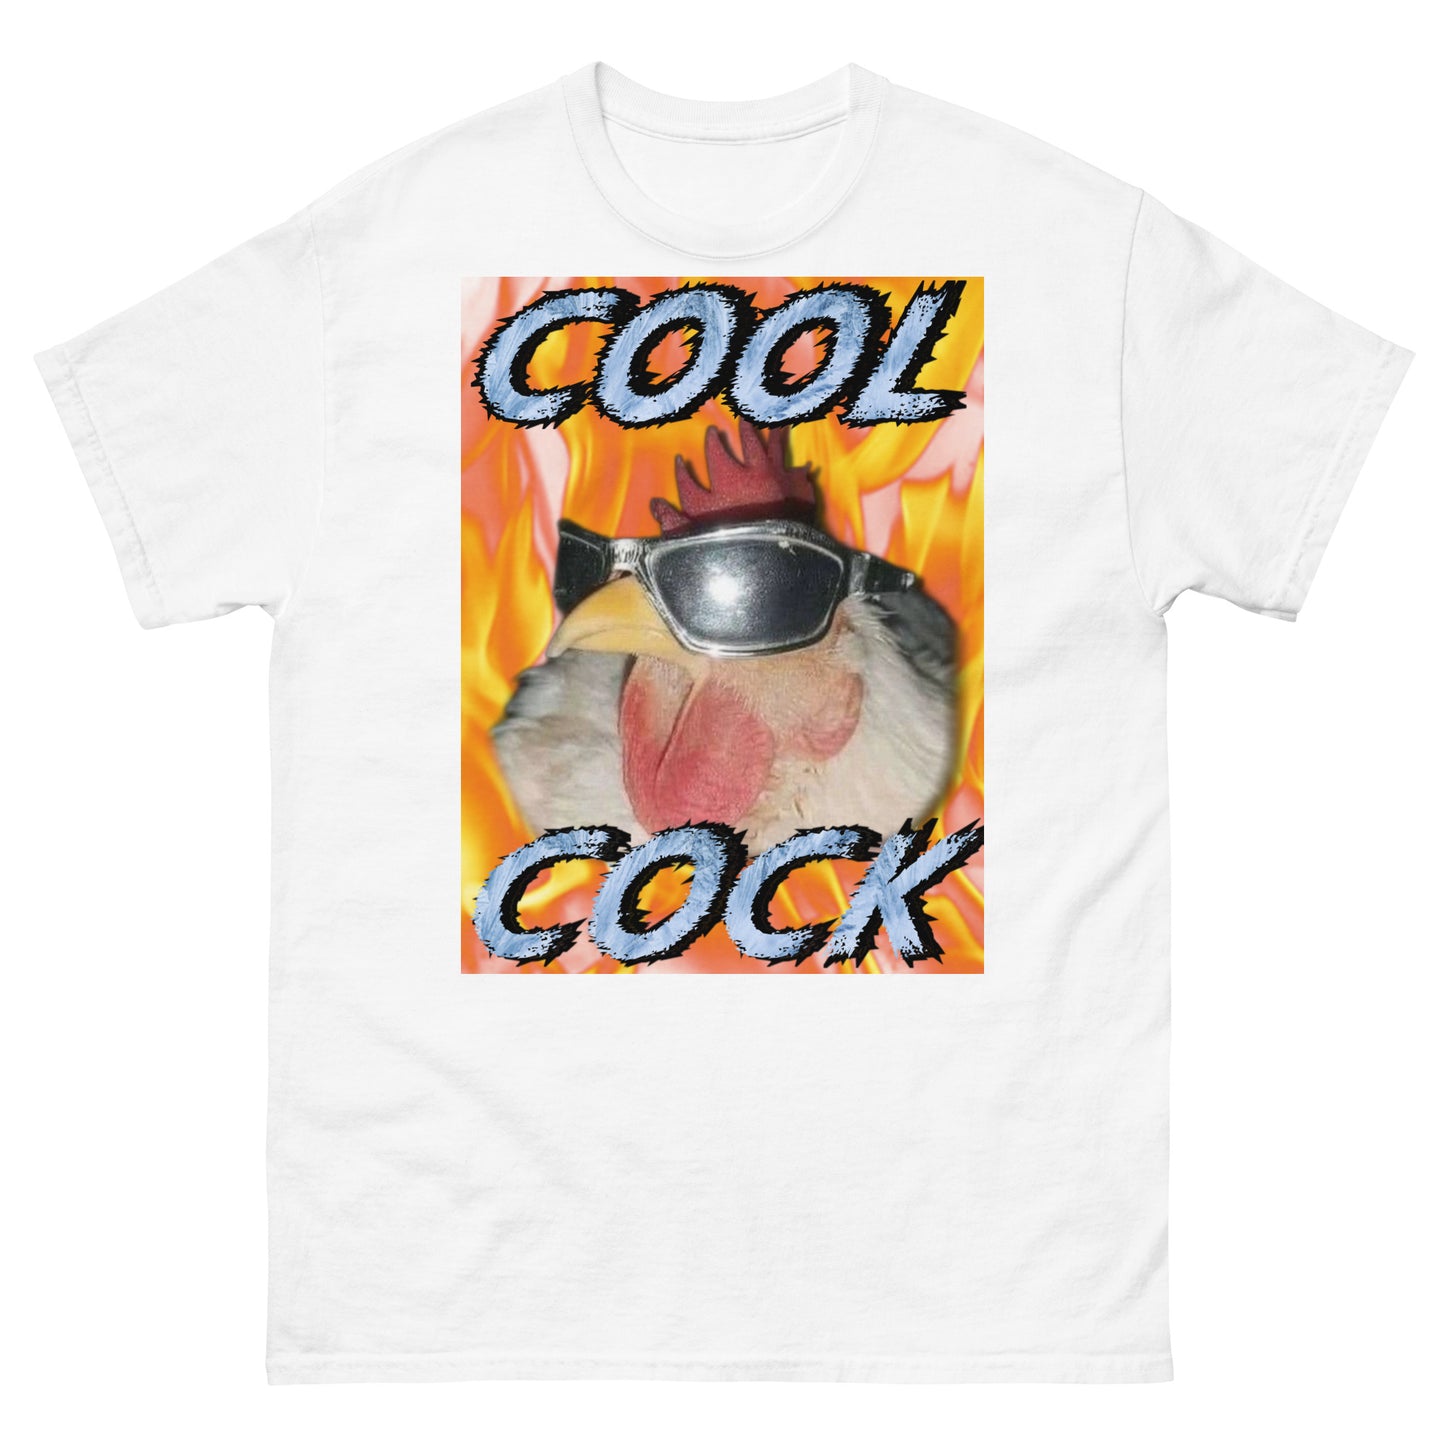 Cool Cock Cringey Tee